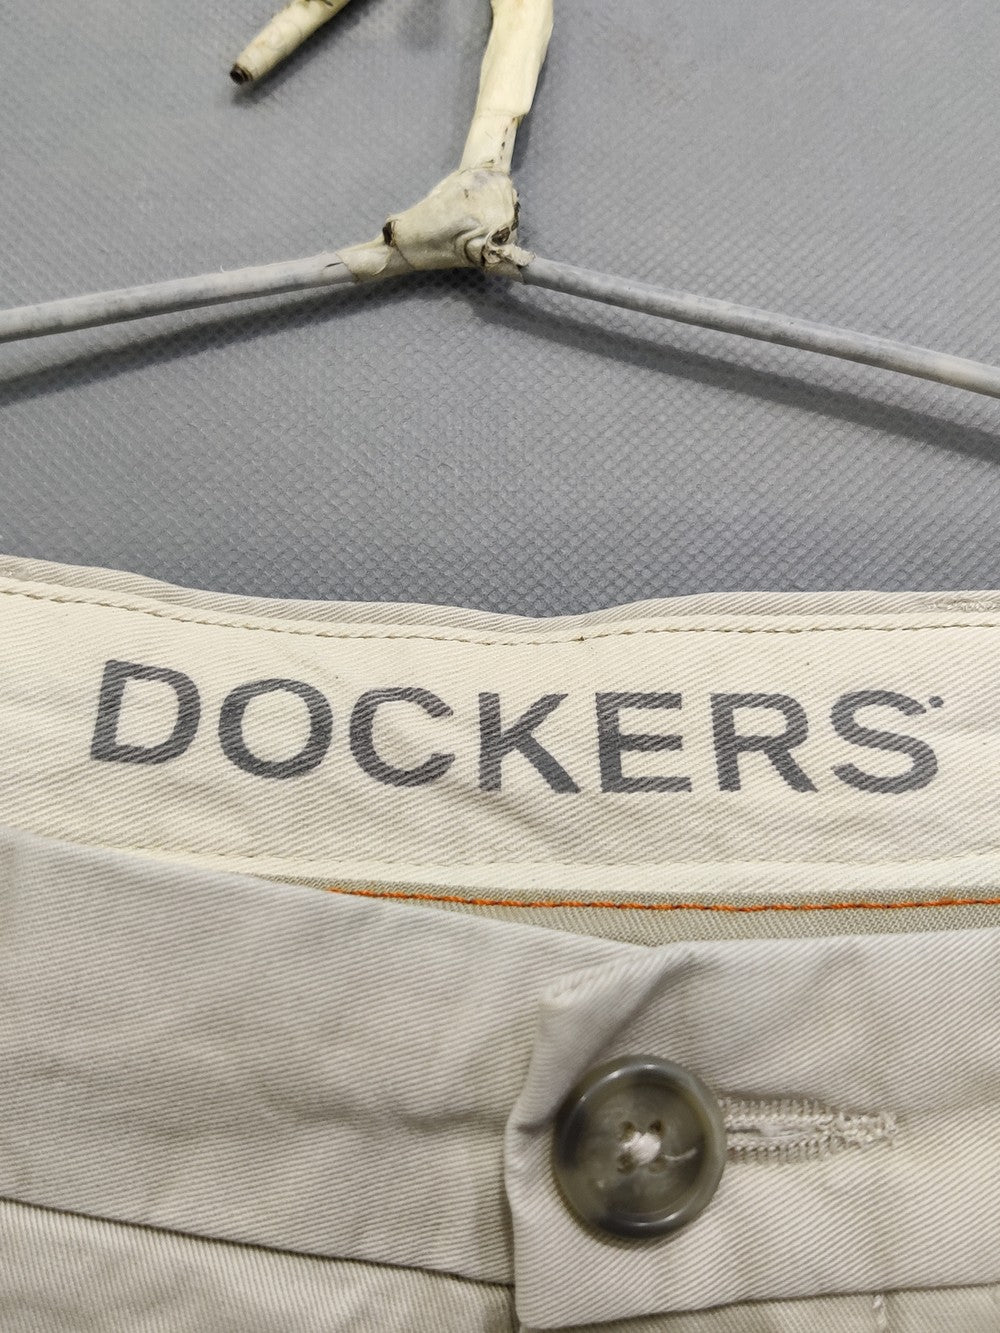 Dockers Branded Original Cotton Dress Pant For Men